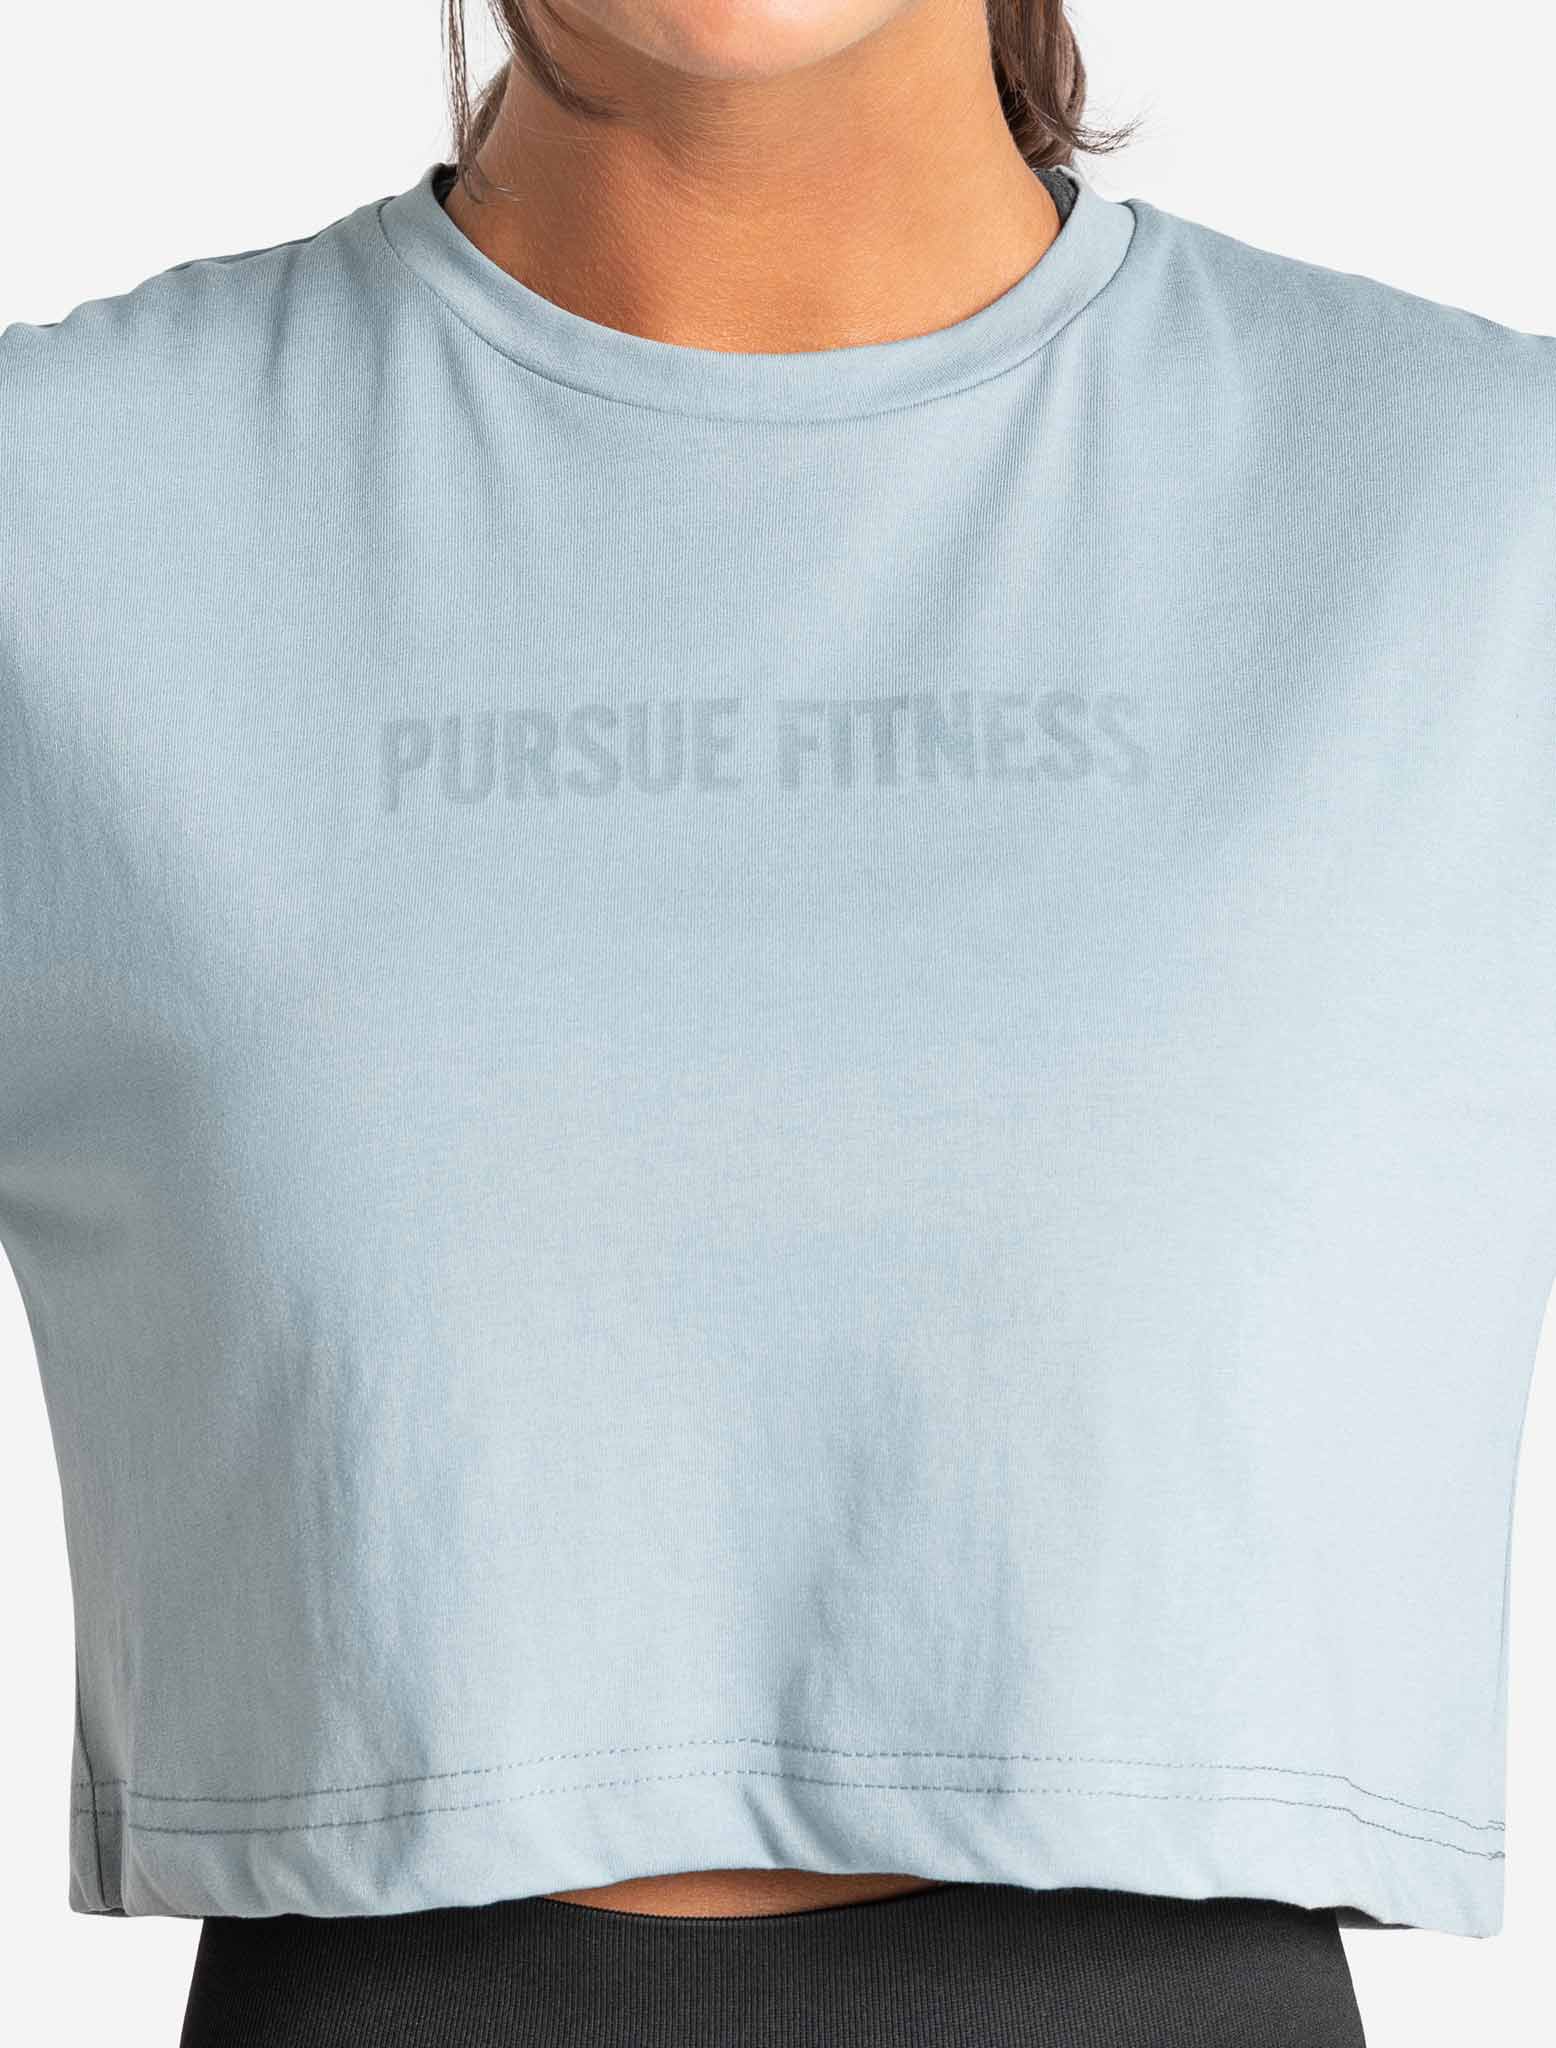 Oversized Crop T-Shirt / Moonstone Blue Pursue Fitness 4